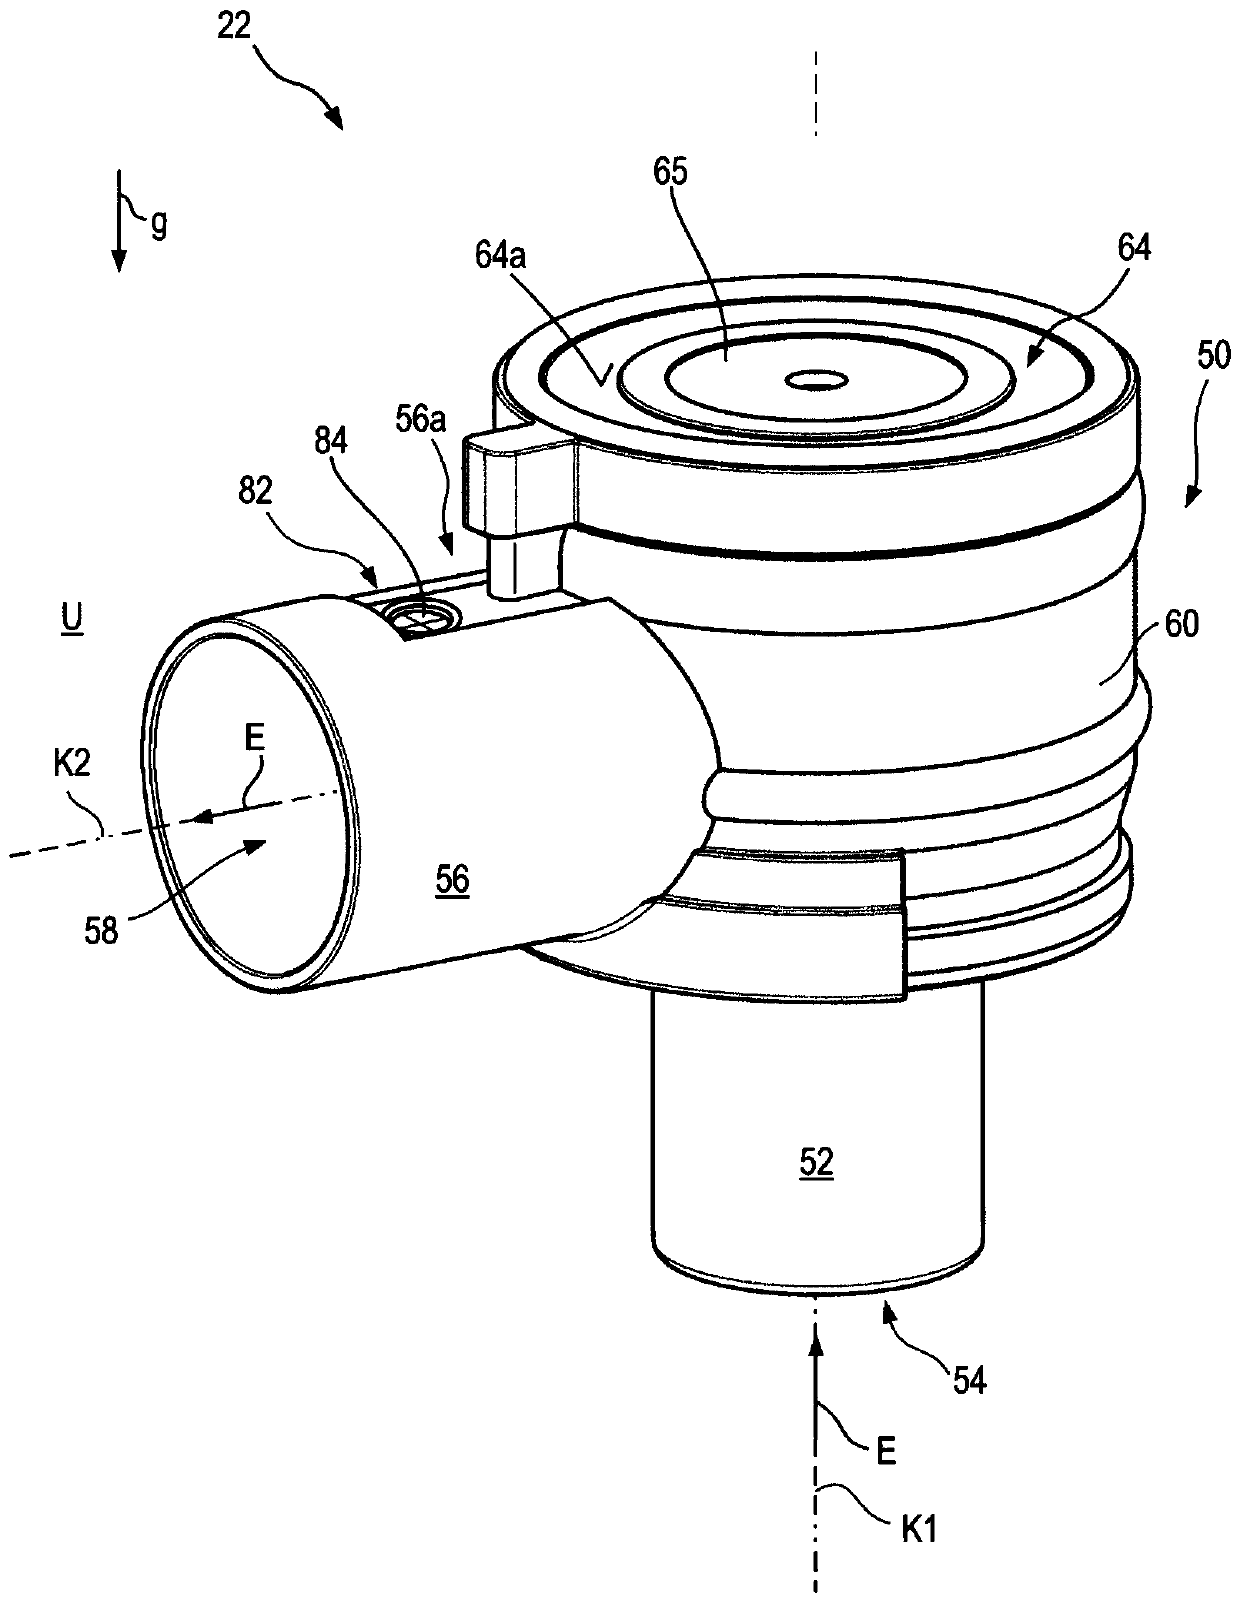 Exhalation valve arrangement for ventilator apparatus with apparatus for receiving pressure sensor